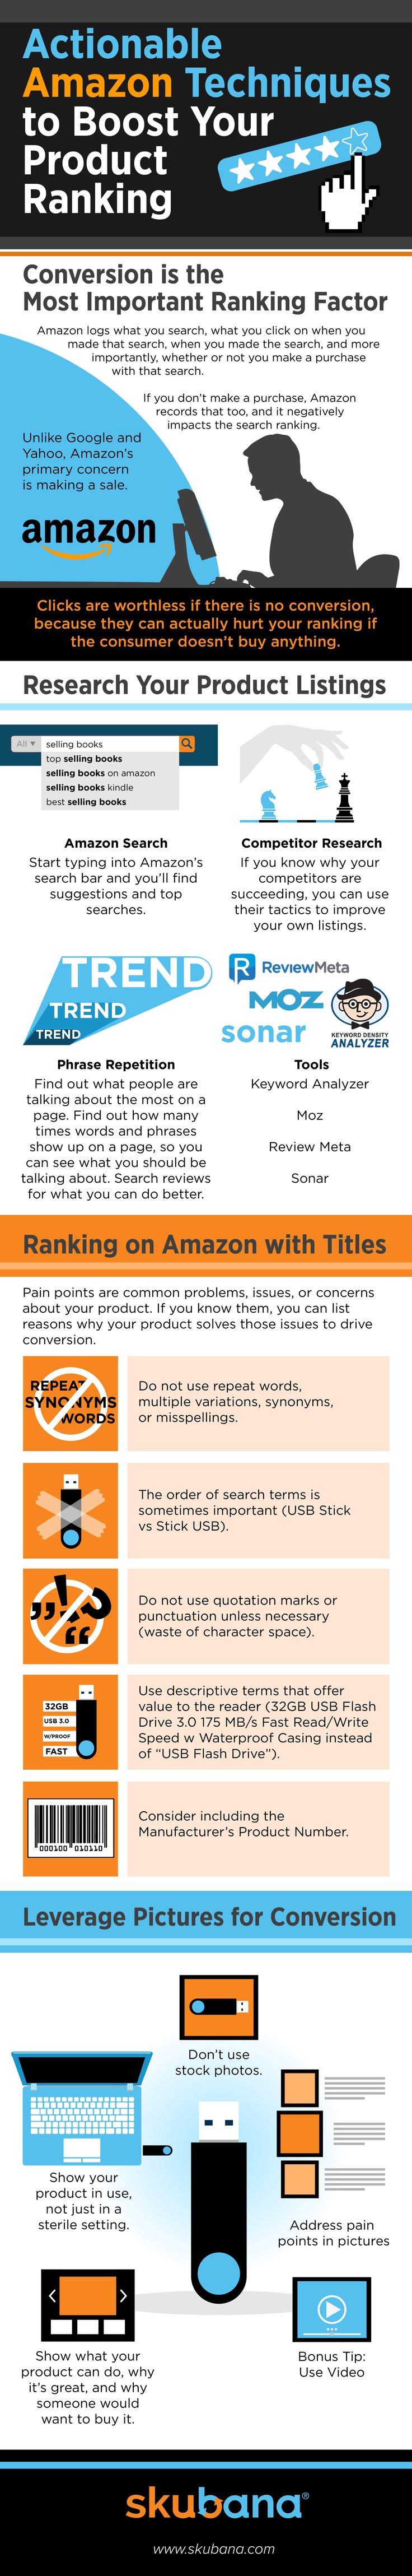 Actionable-Amazon-Techniques-Infographic-1 2